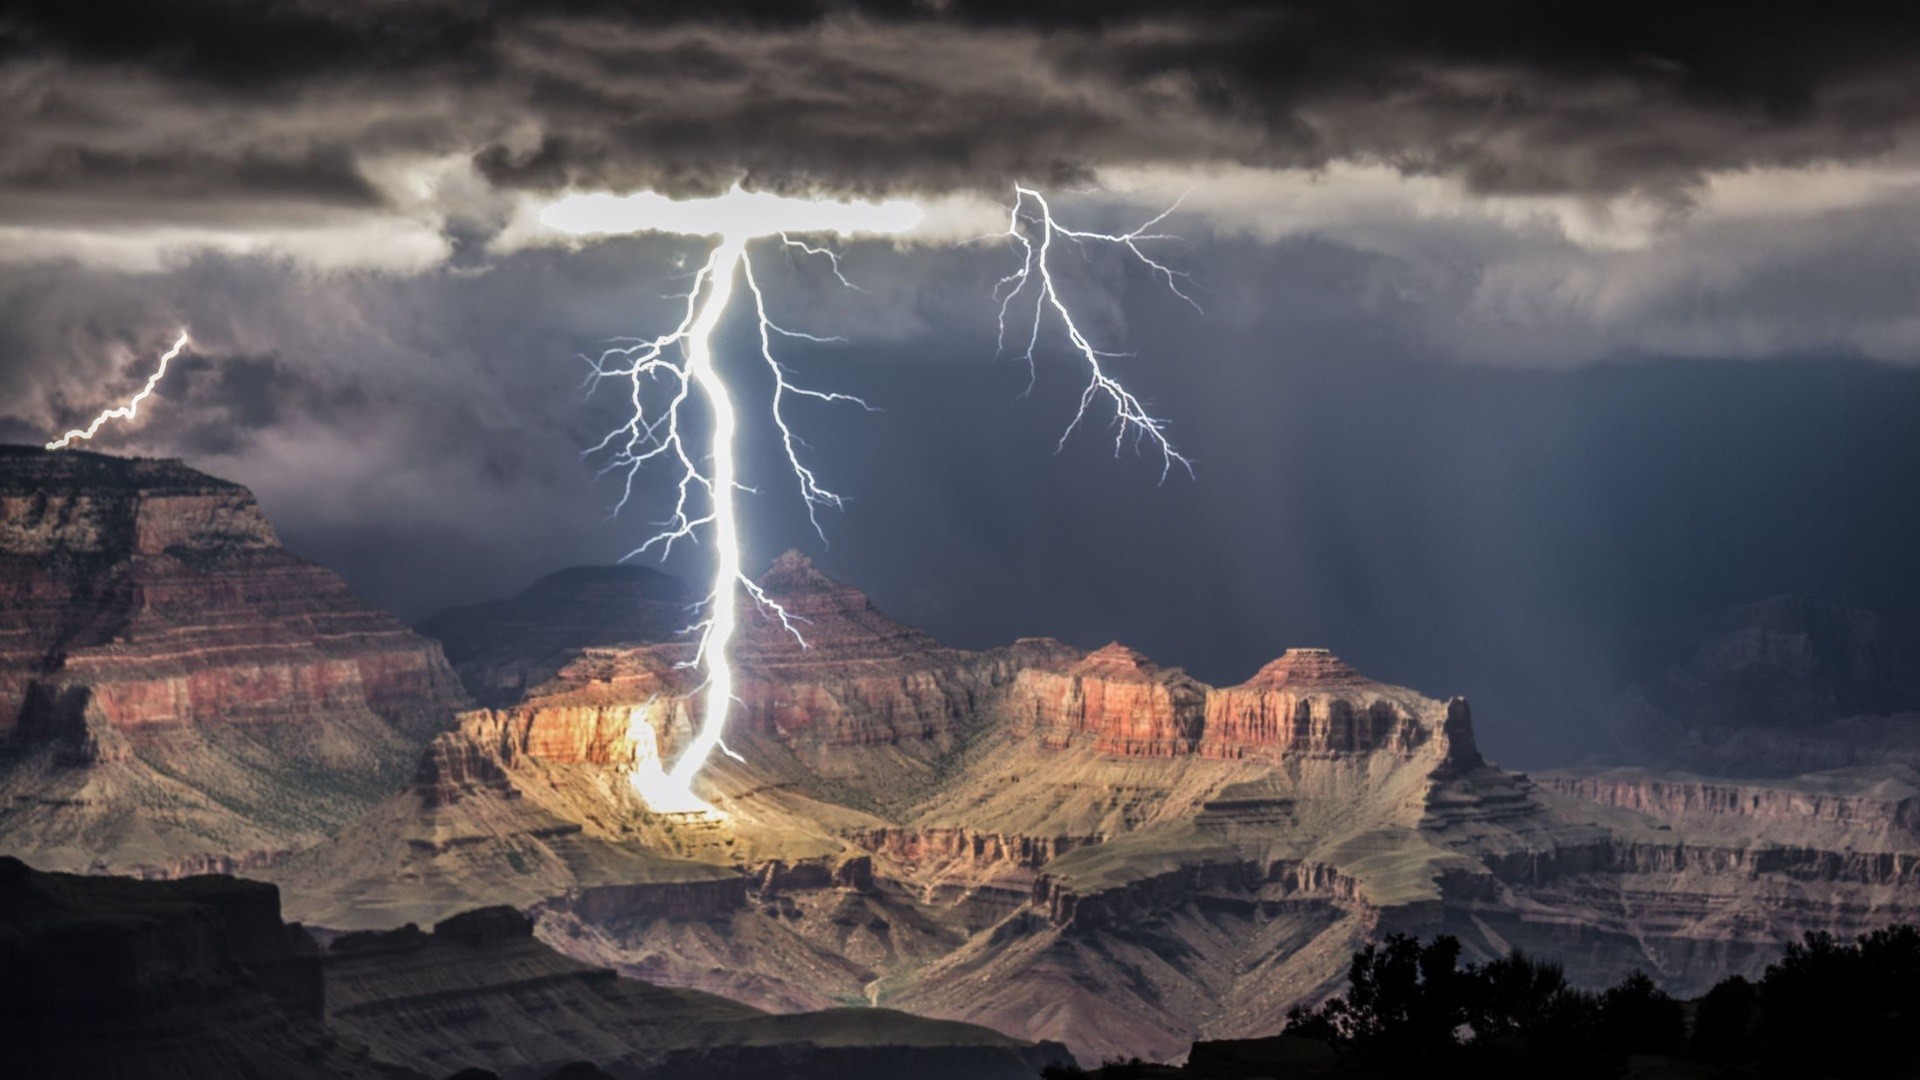 1920x1080 The Grand Canyon - lightning strike at night []